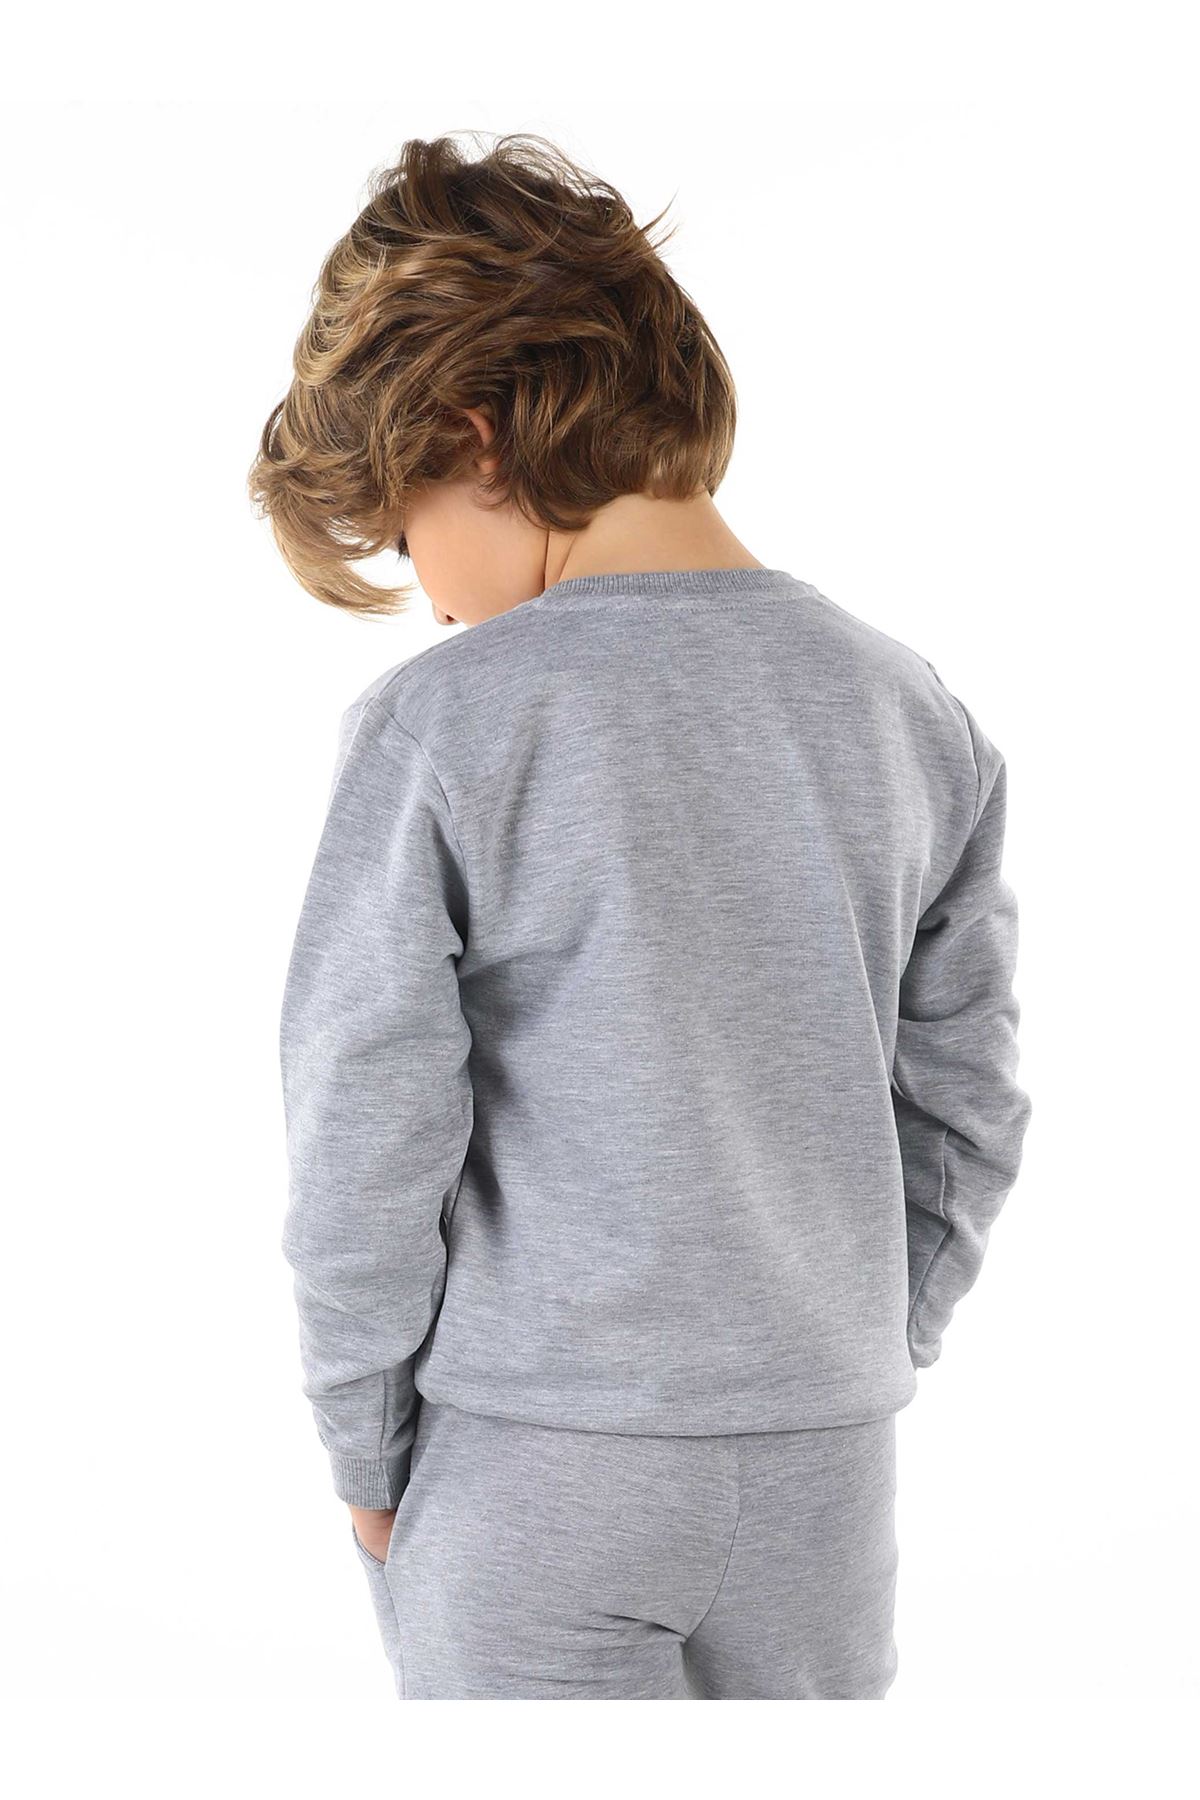 Gray Seasonal Male Child Sweatshirt